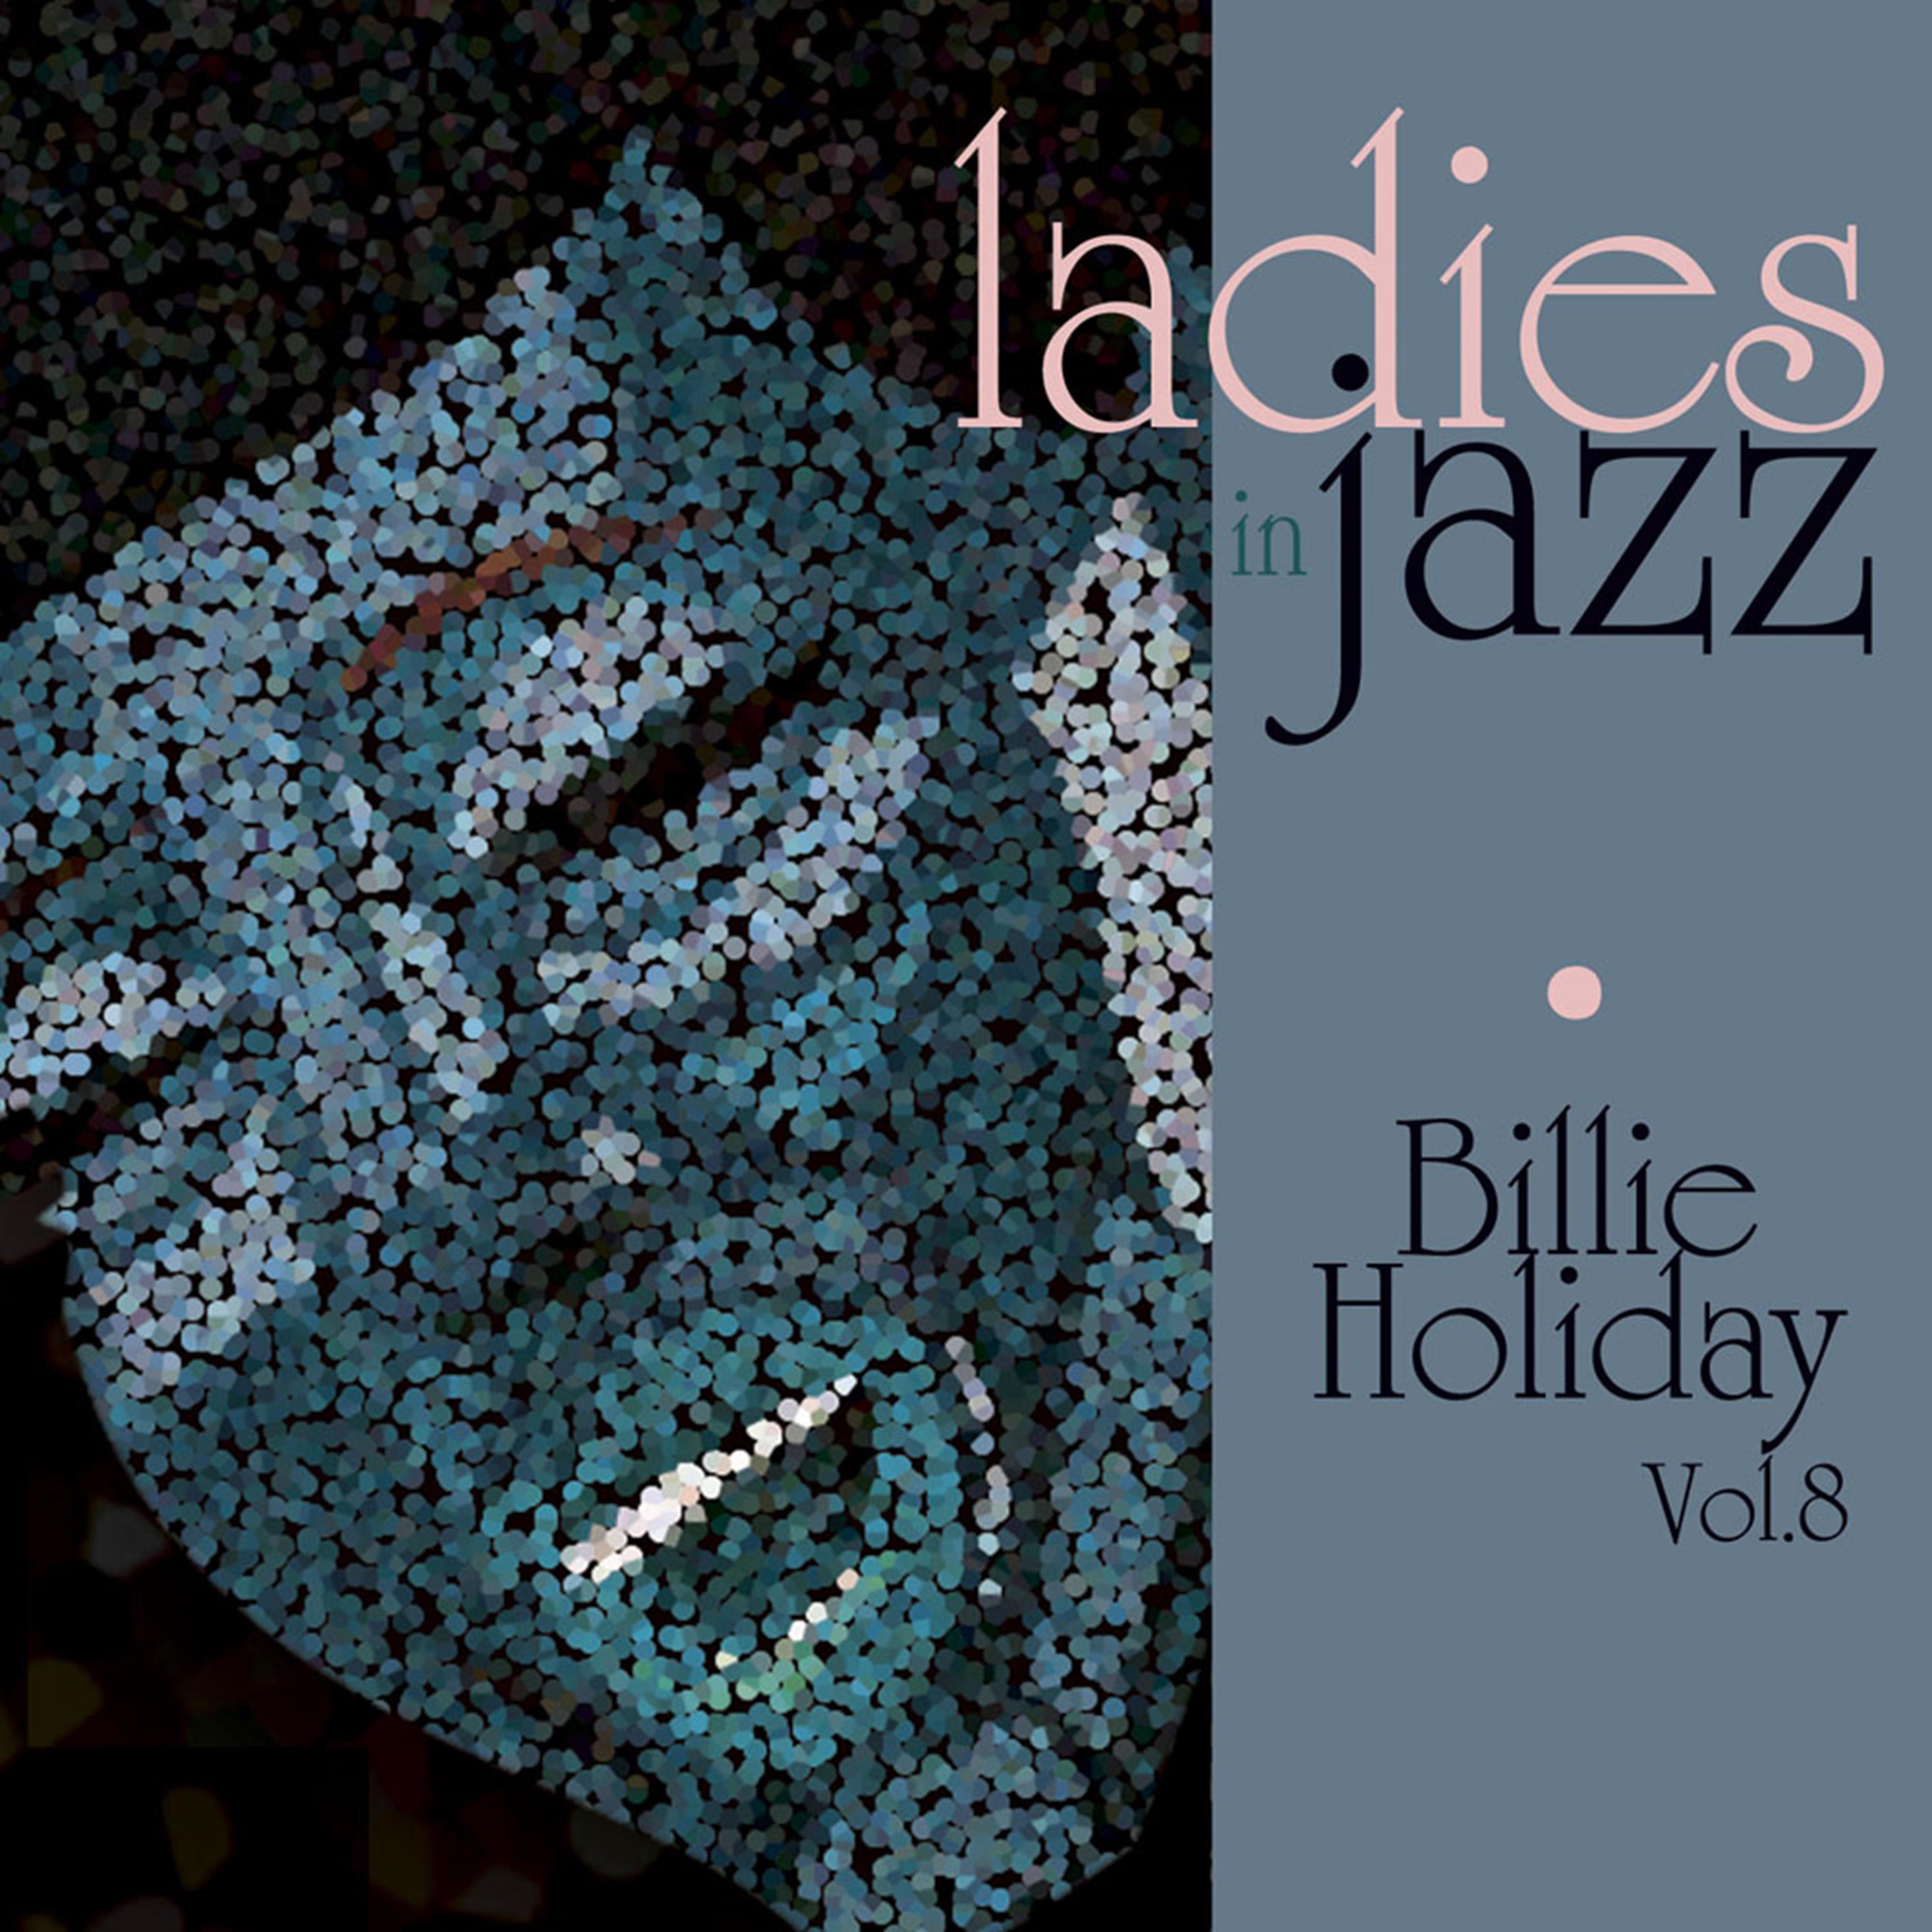 Ladies in Jazz - Billie Holiday, Vol. 8